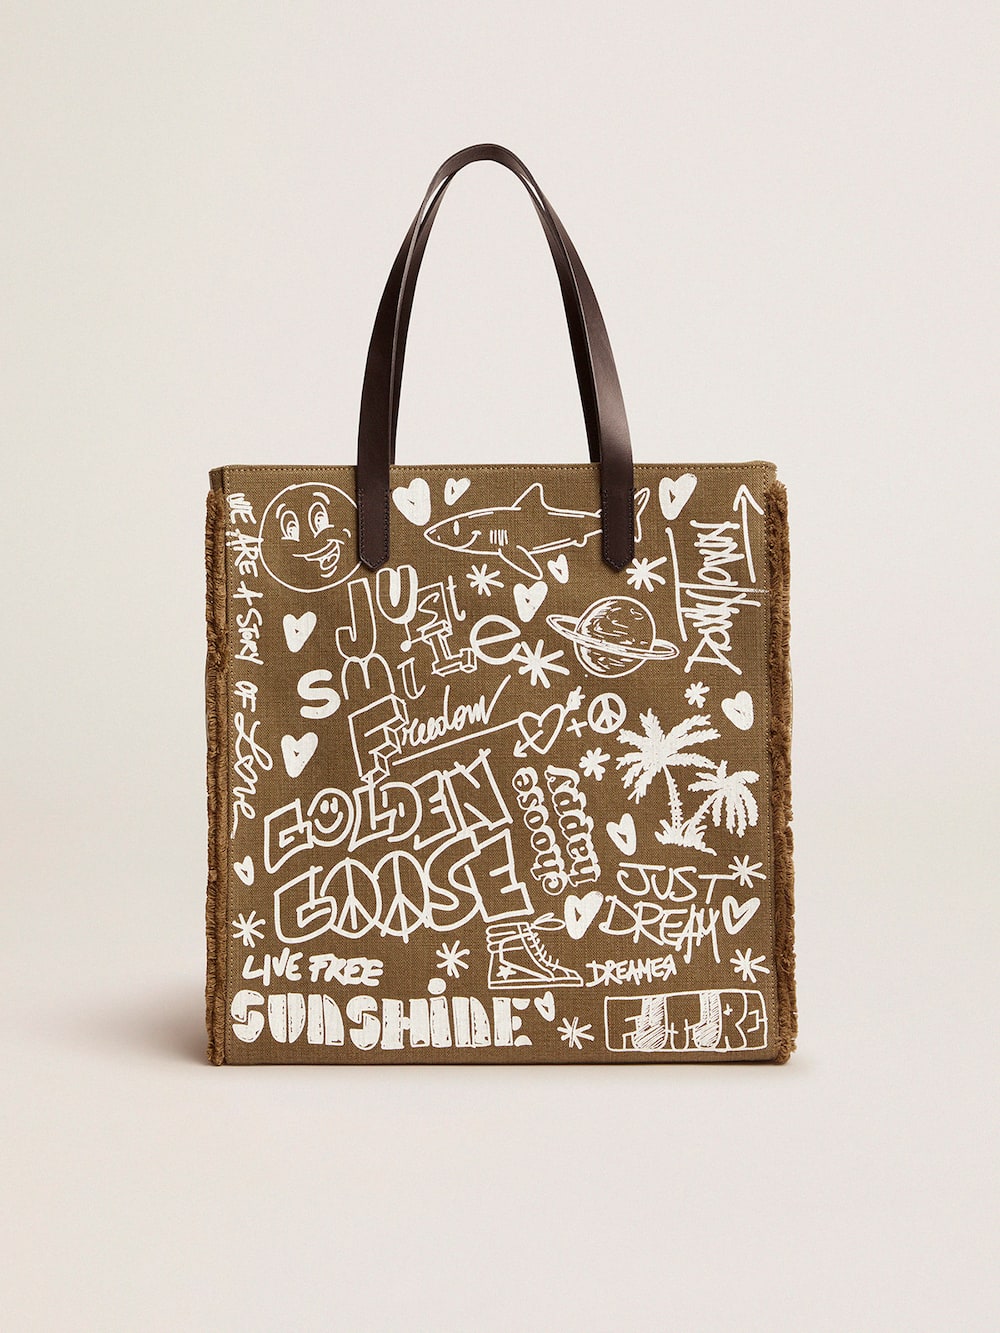 Golden Goose - Armeegrüne California Bag aus Tuch im Hochformat mit Graffiti in 